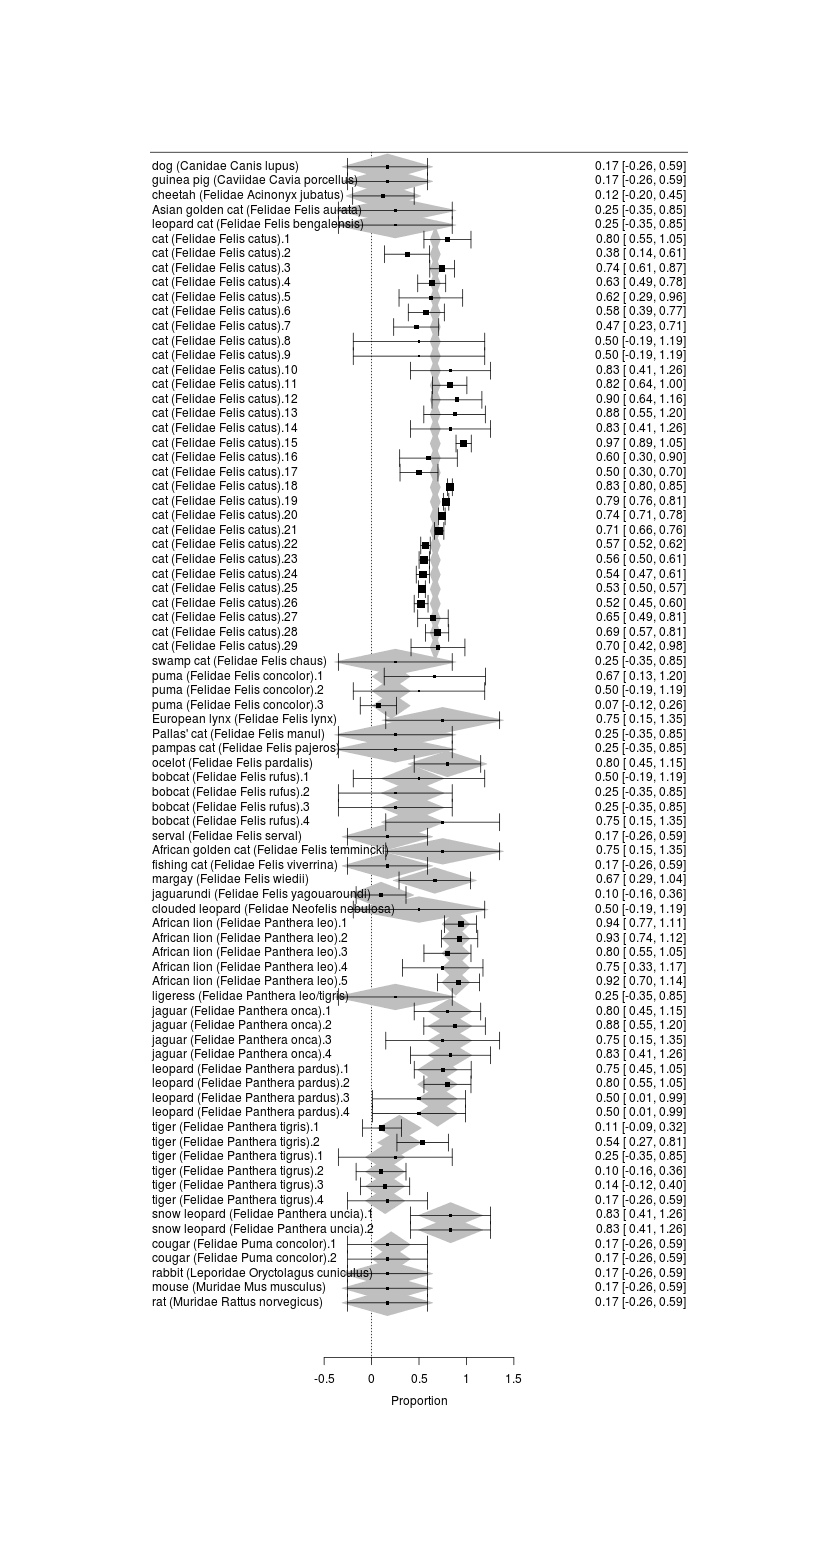 Forest plot of catnip responses across all sampled species